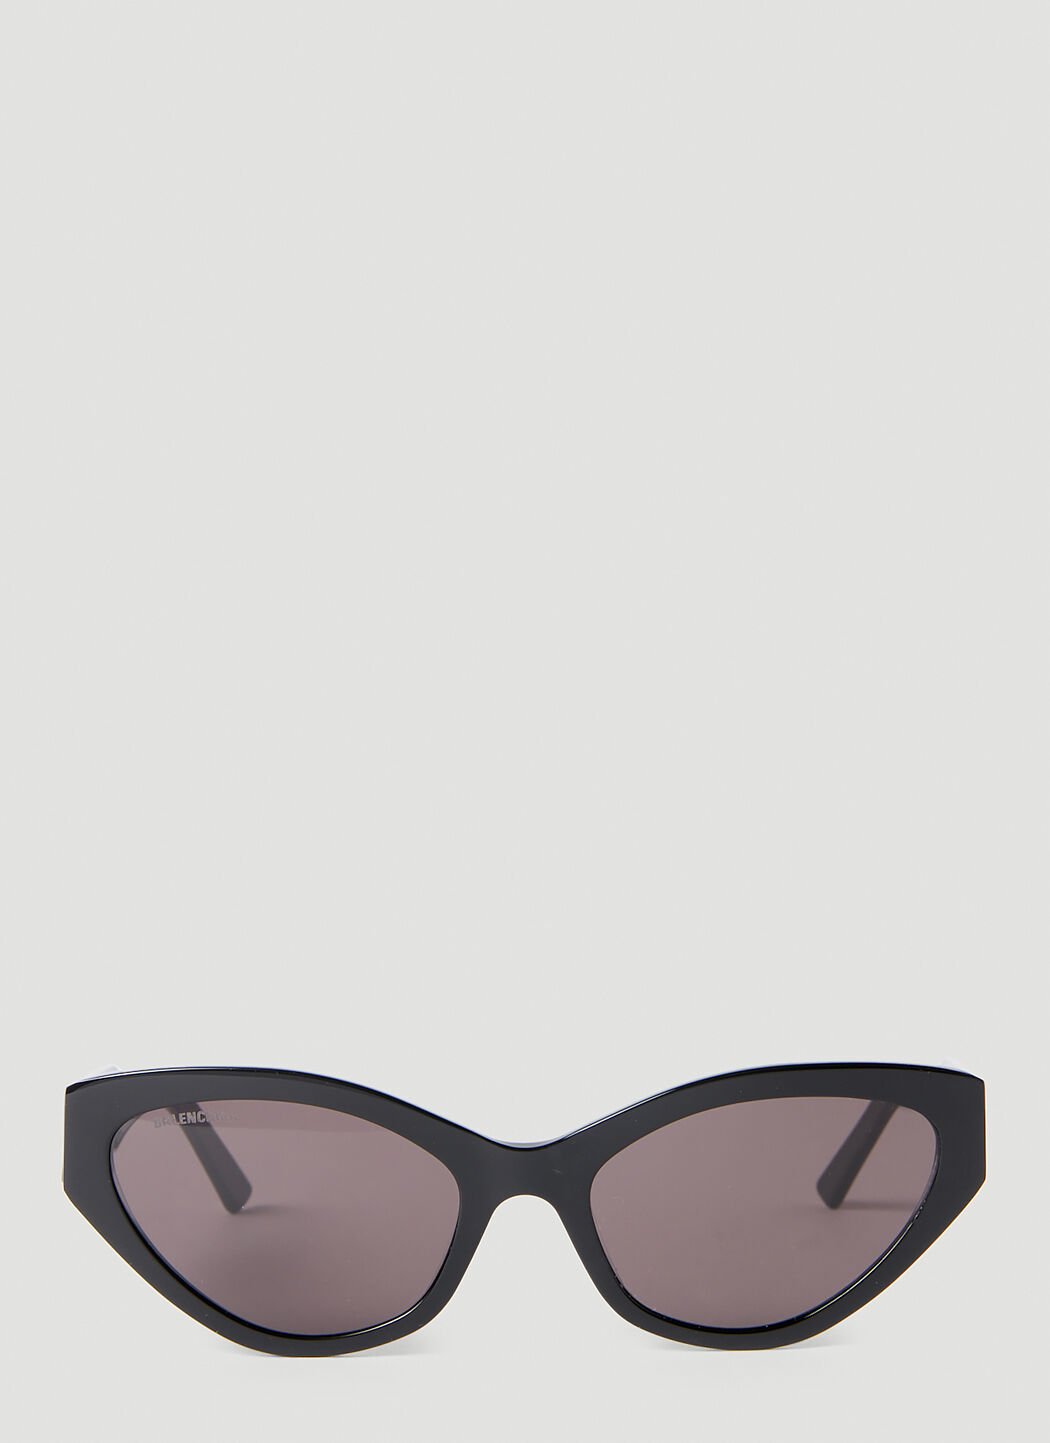 Balenciaga Flat Cat Eye Sunglasses Black bcs0253001